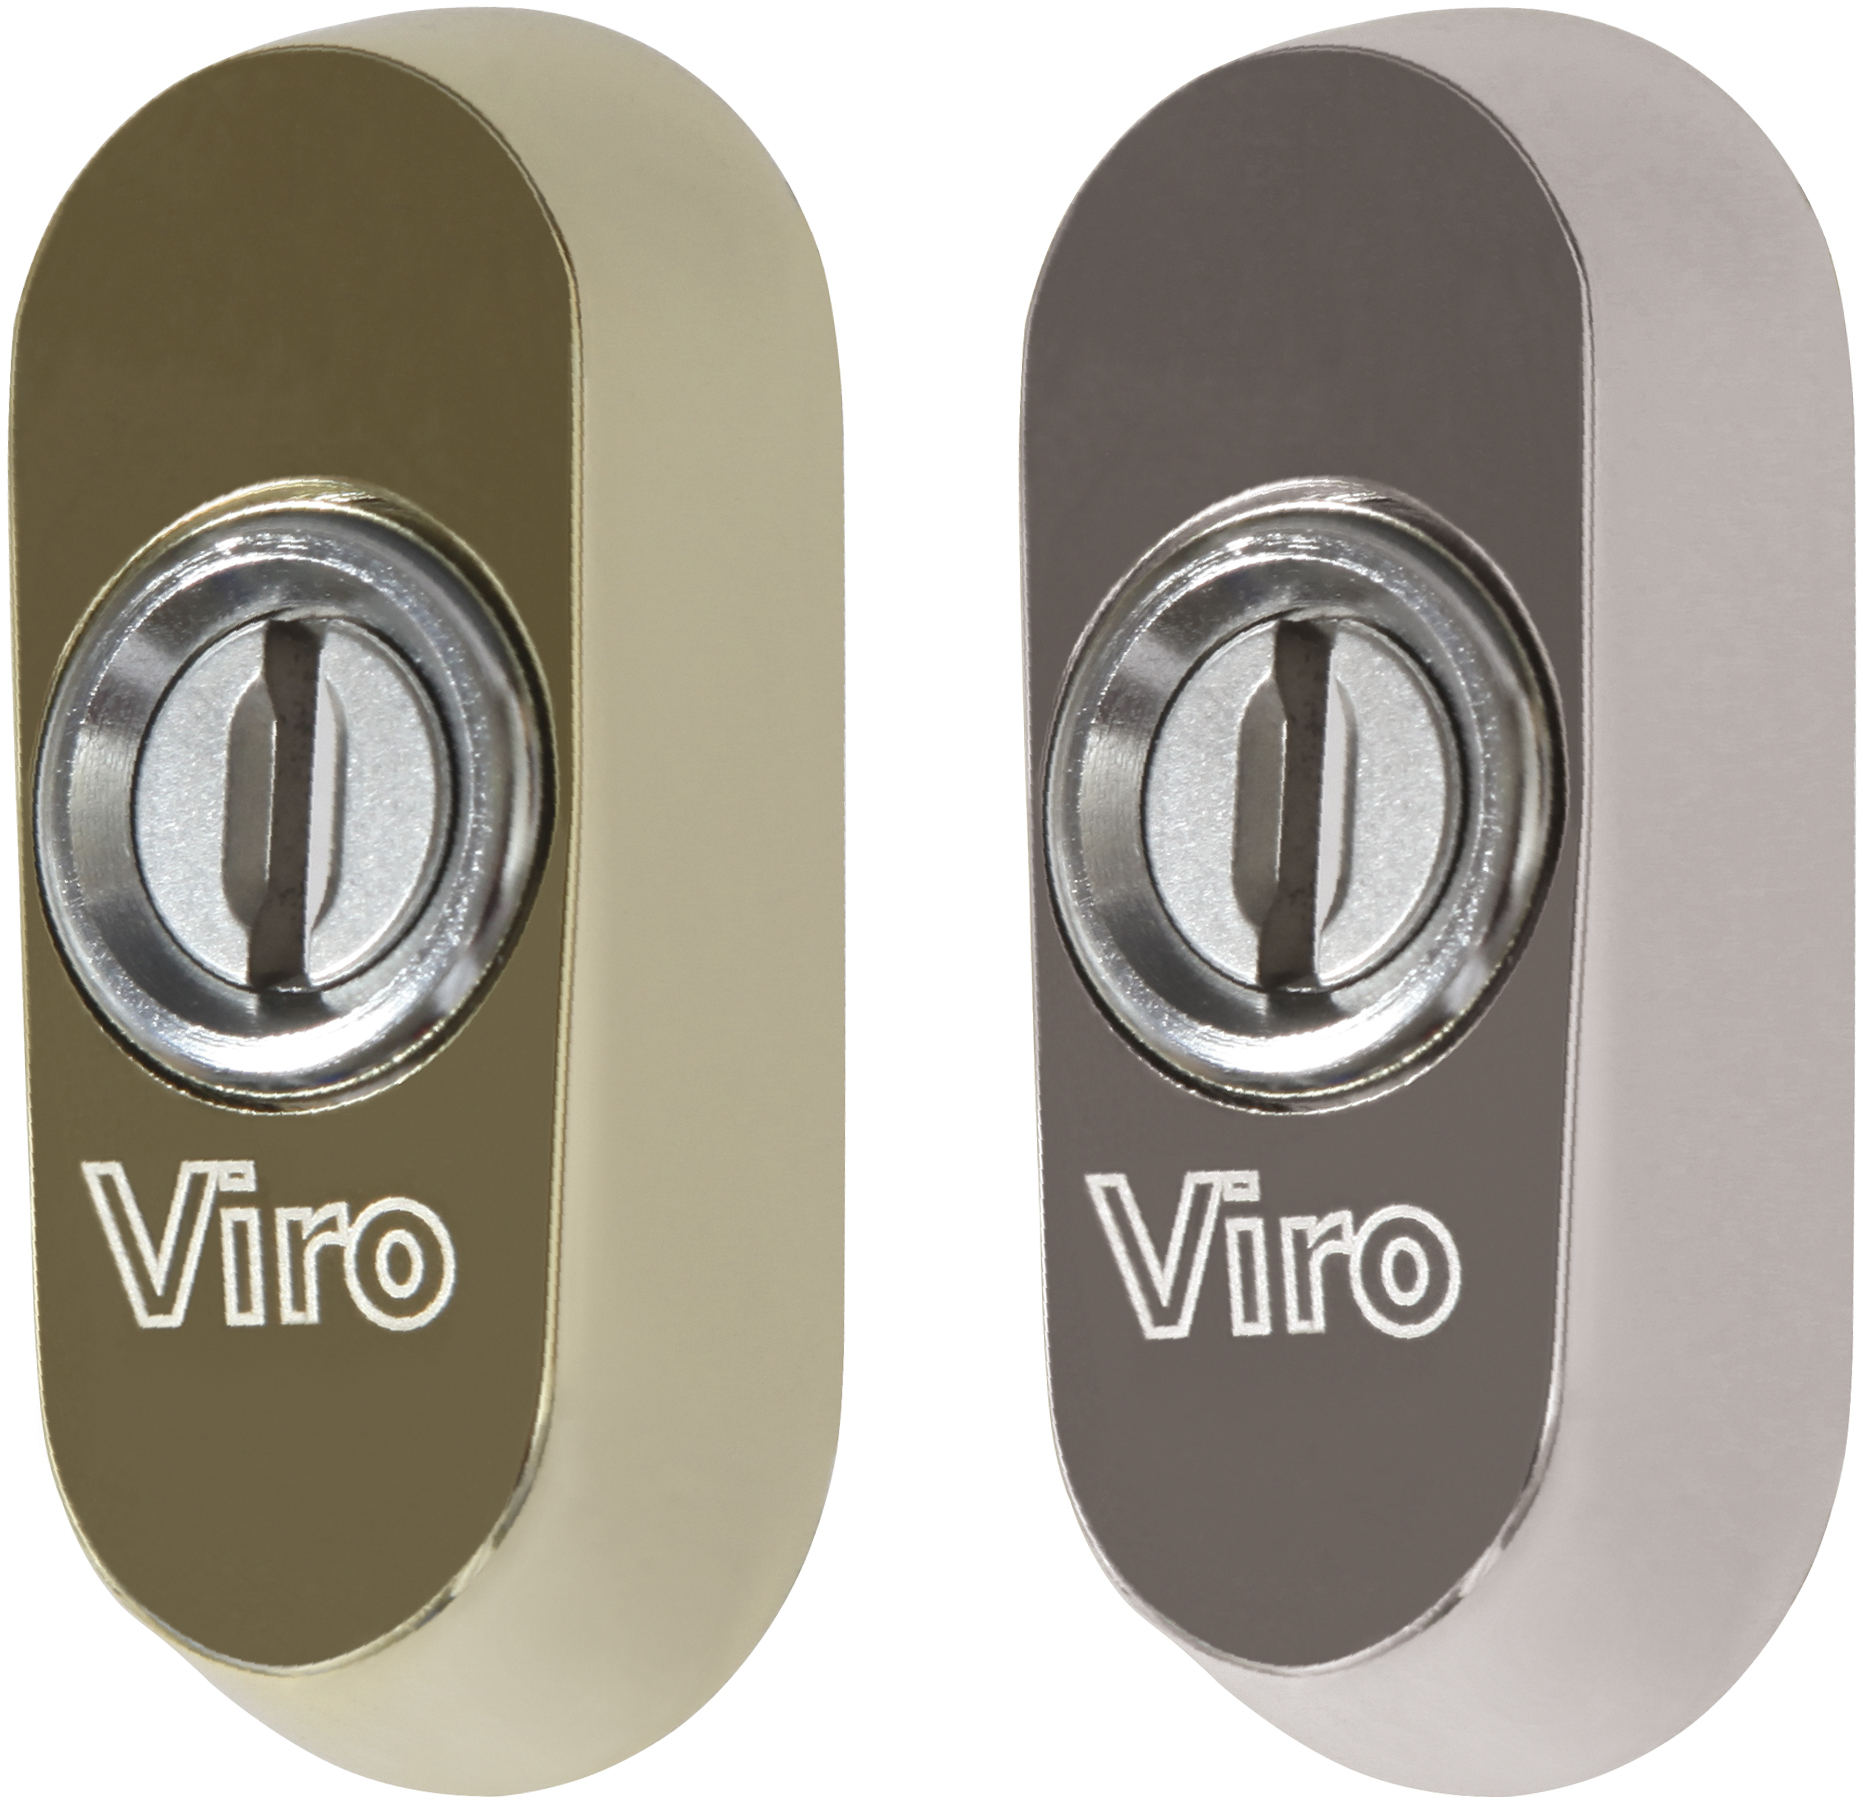 VIRO - Oval security escutcheons for UNIVERSAL SPRANGA and/or mortise door locks